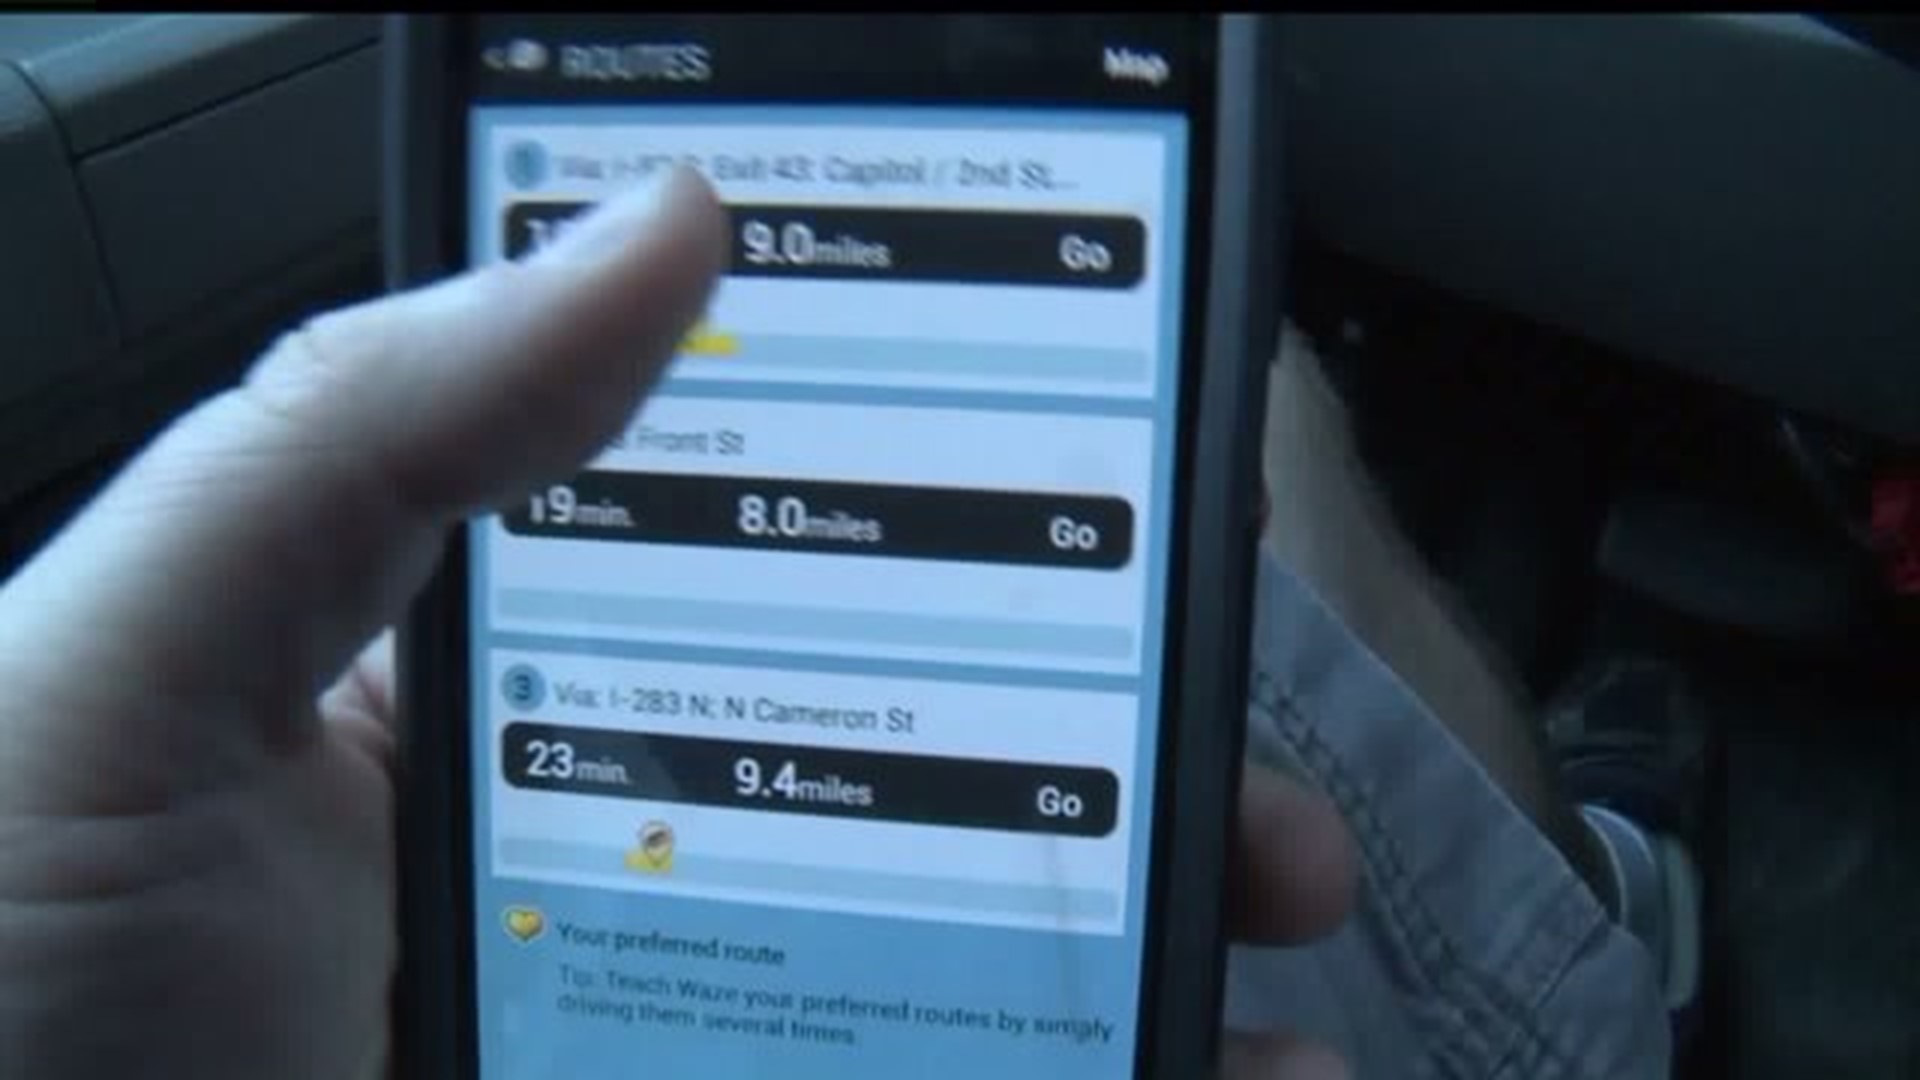 Pa. Turnpike partnering with navigation app Waze